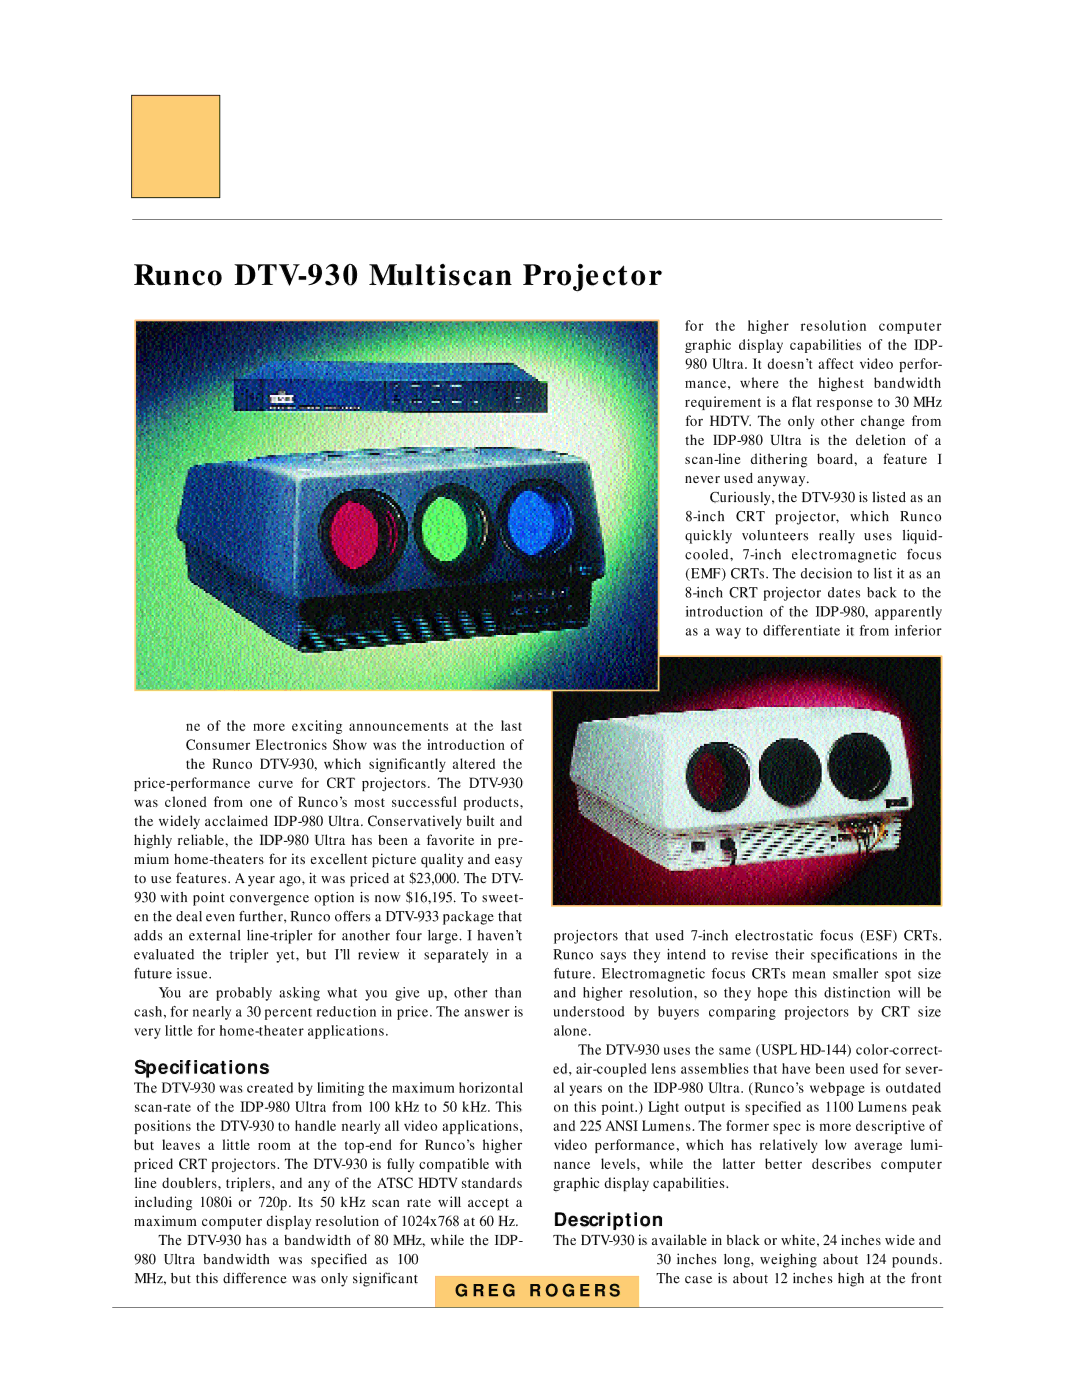 Sony G90 manual Runco DTV-930 Multiscan Projector, Specifications, Description 